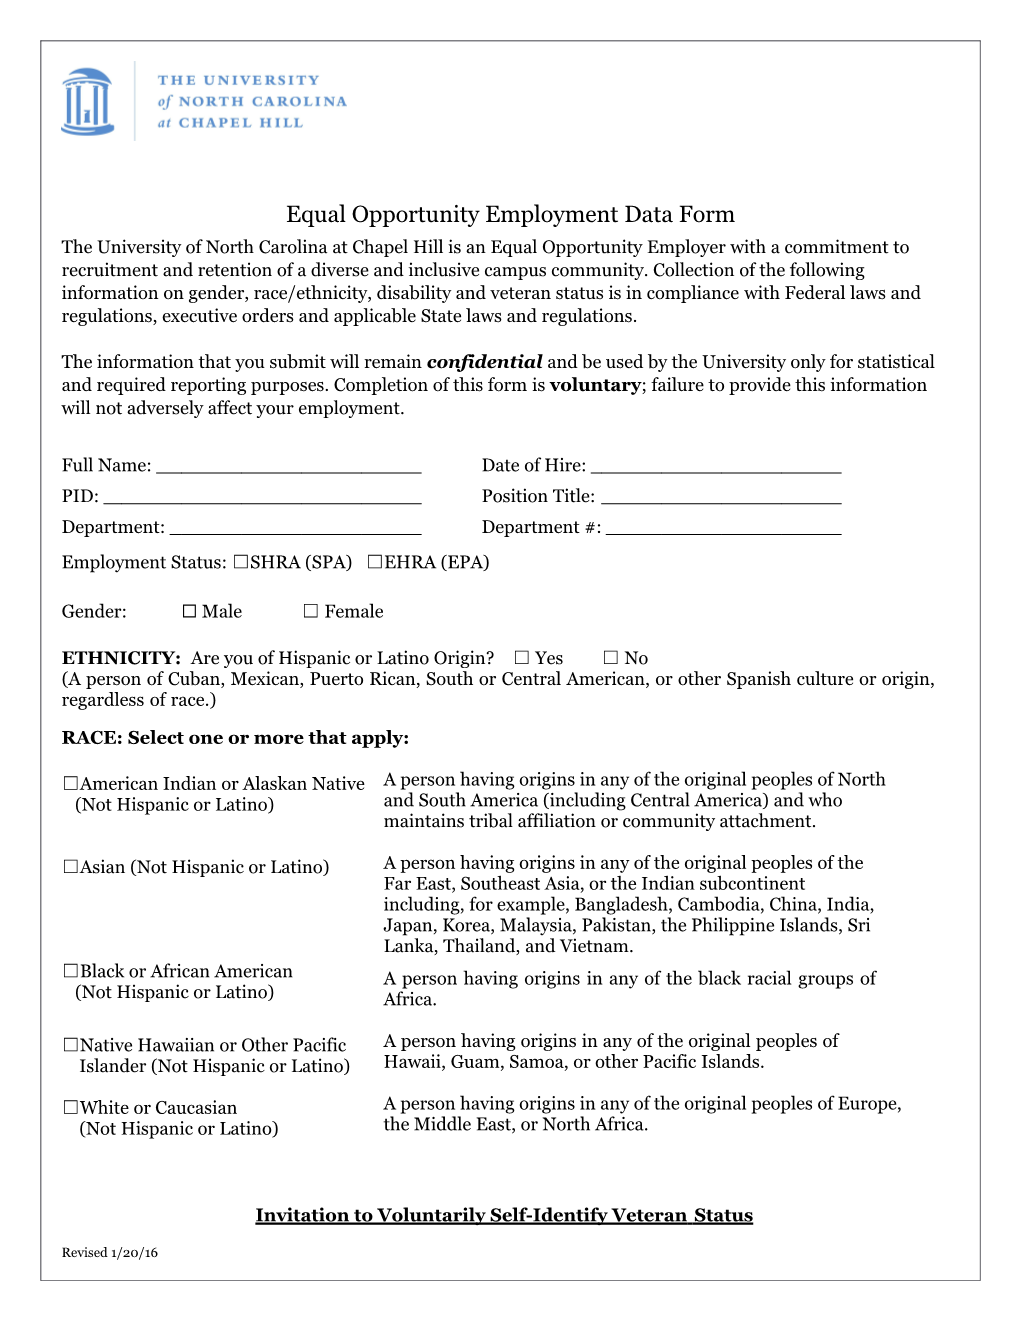 Employee Self-Identification Forms (00087856)